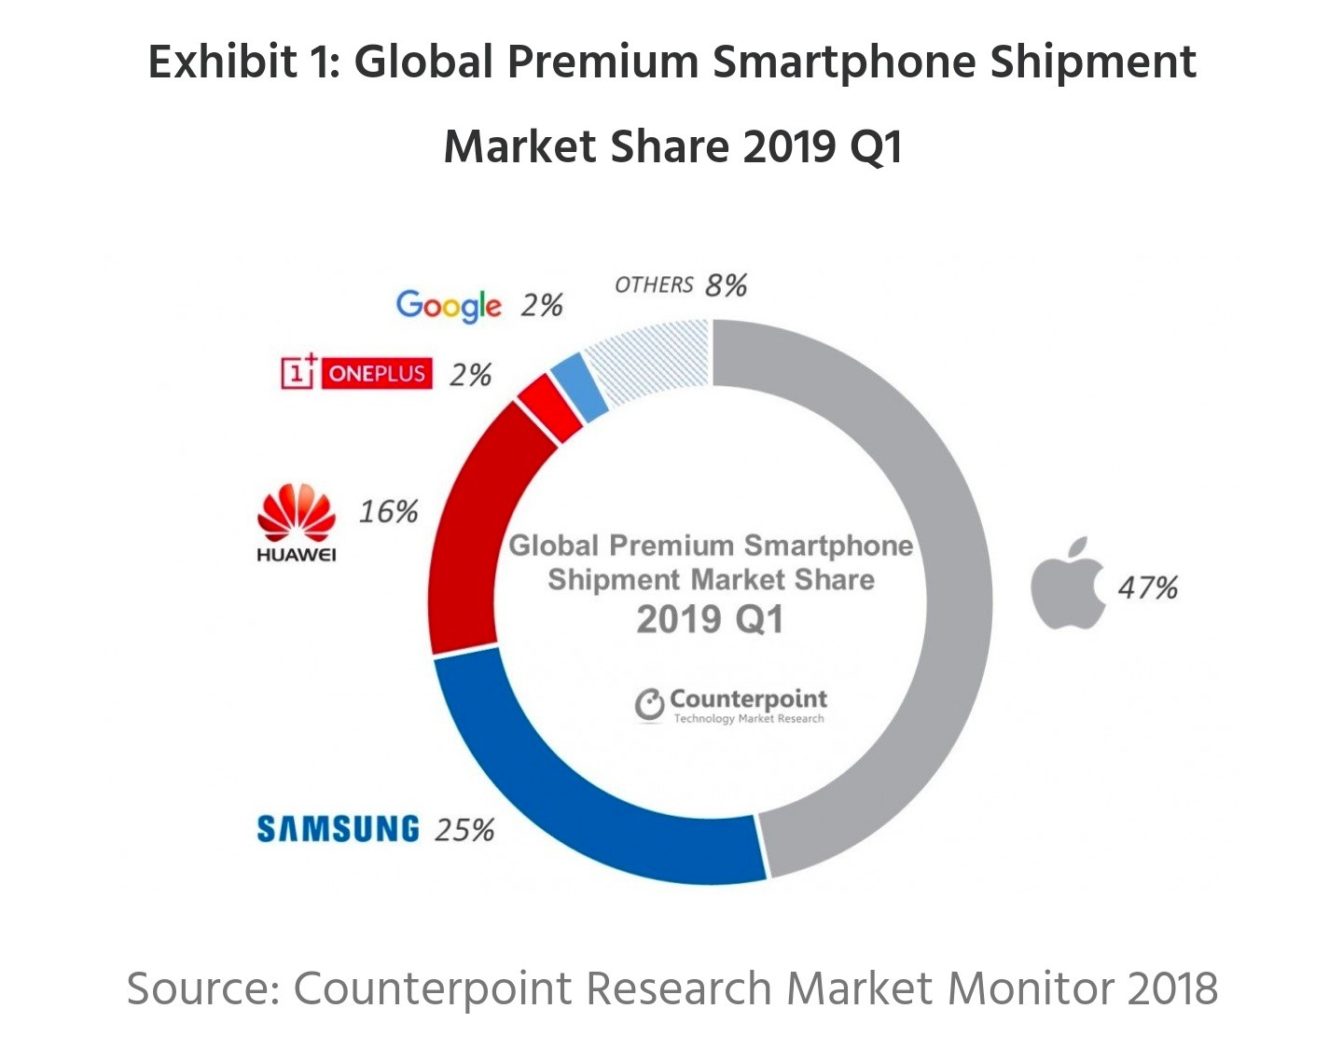 Global Premium Smartphone Shipment Market Share